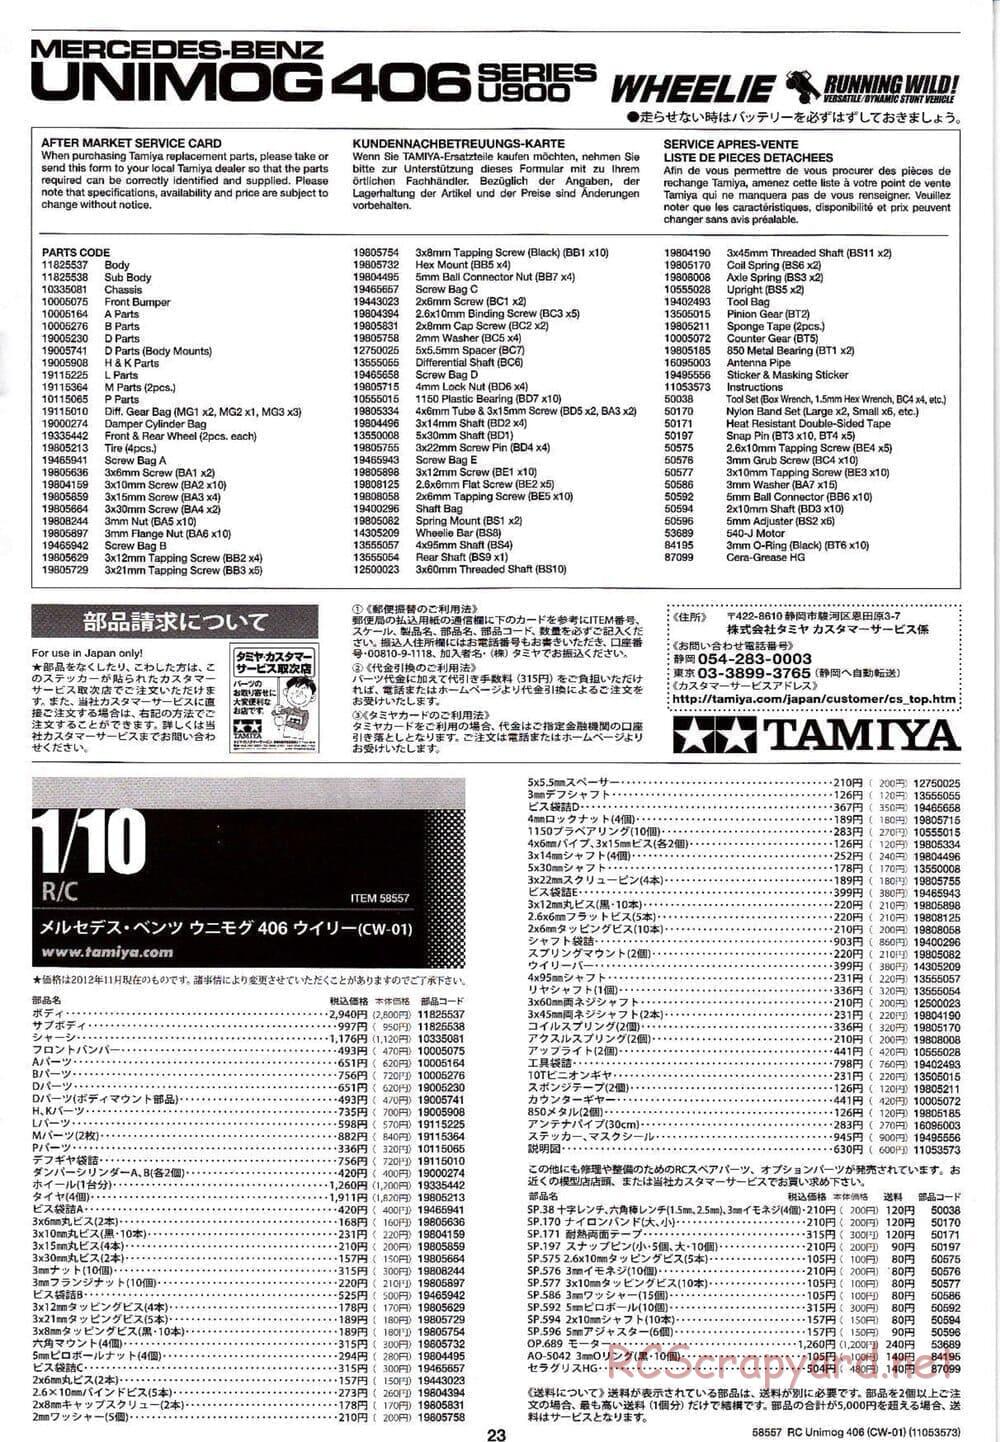 Tamiya - Mercedes-Benz Unimog 406 Series U900 - CW-01 Chassis - Manual - Page 23